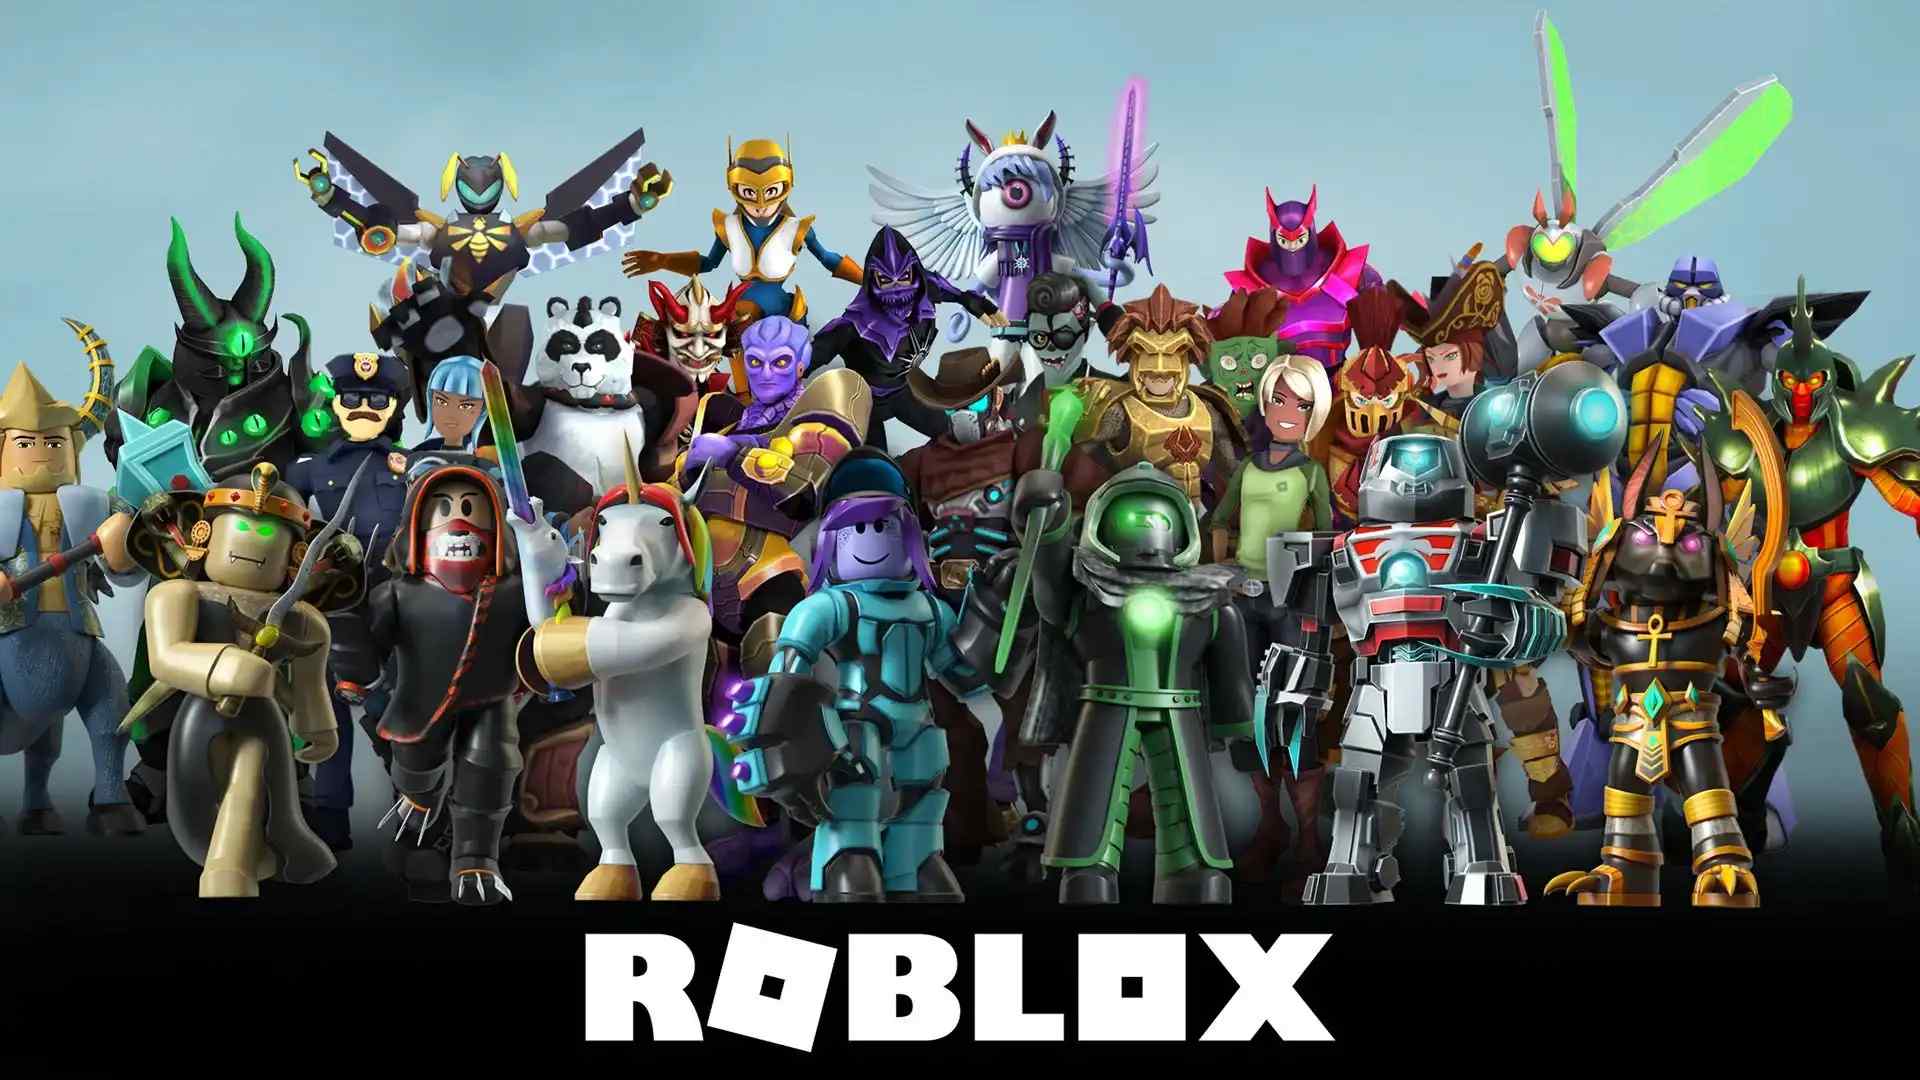 Roblox Wallpapers - Top 35 Best Roblox Backgrounds Download